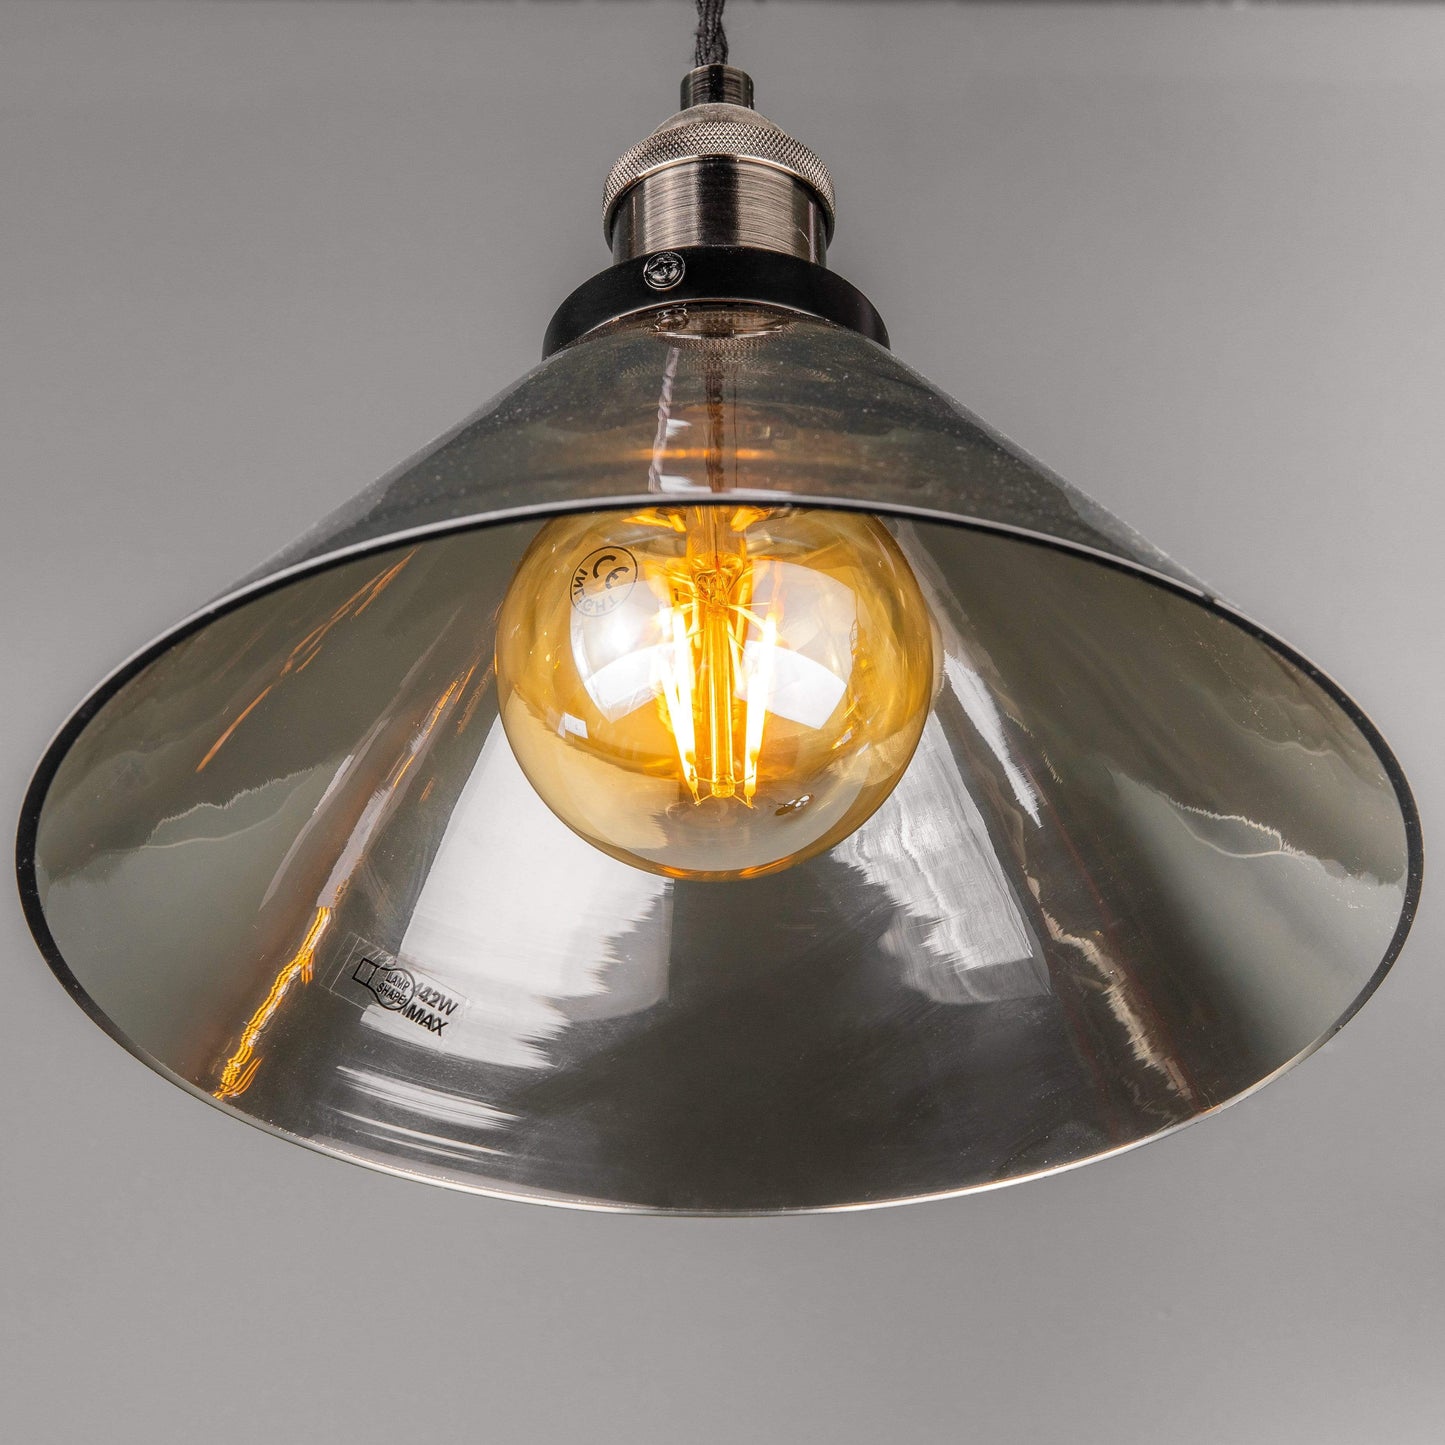 Lights  -  Inlight Algol Glass Cone Pendant Light Shade  -  50150529